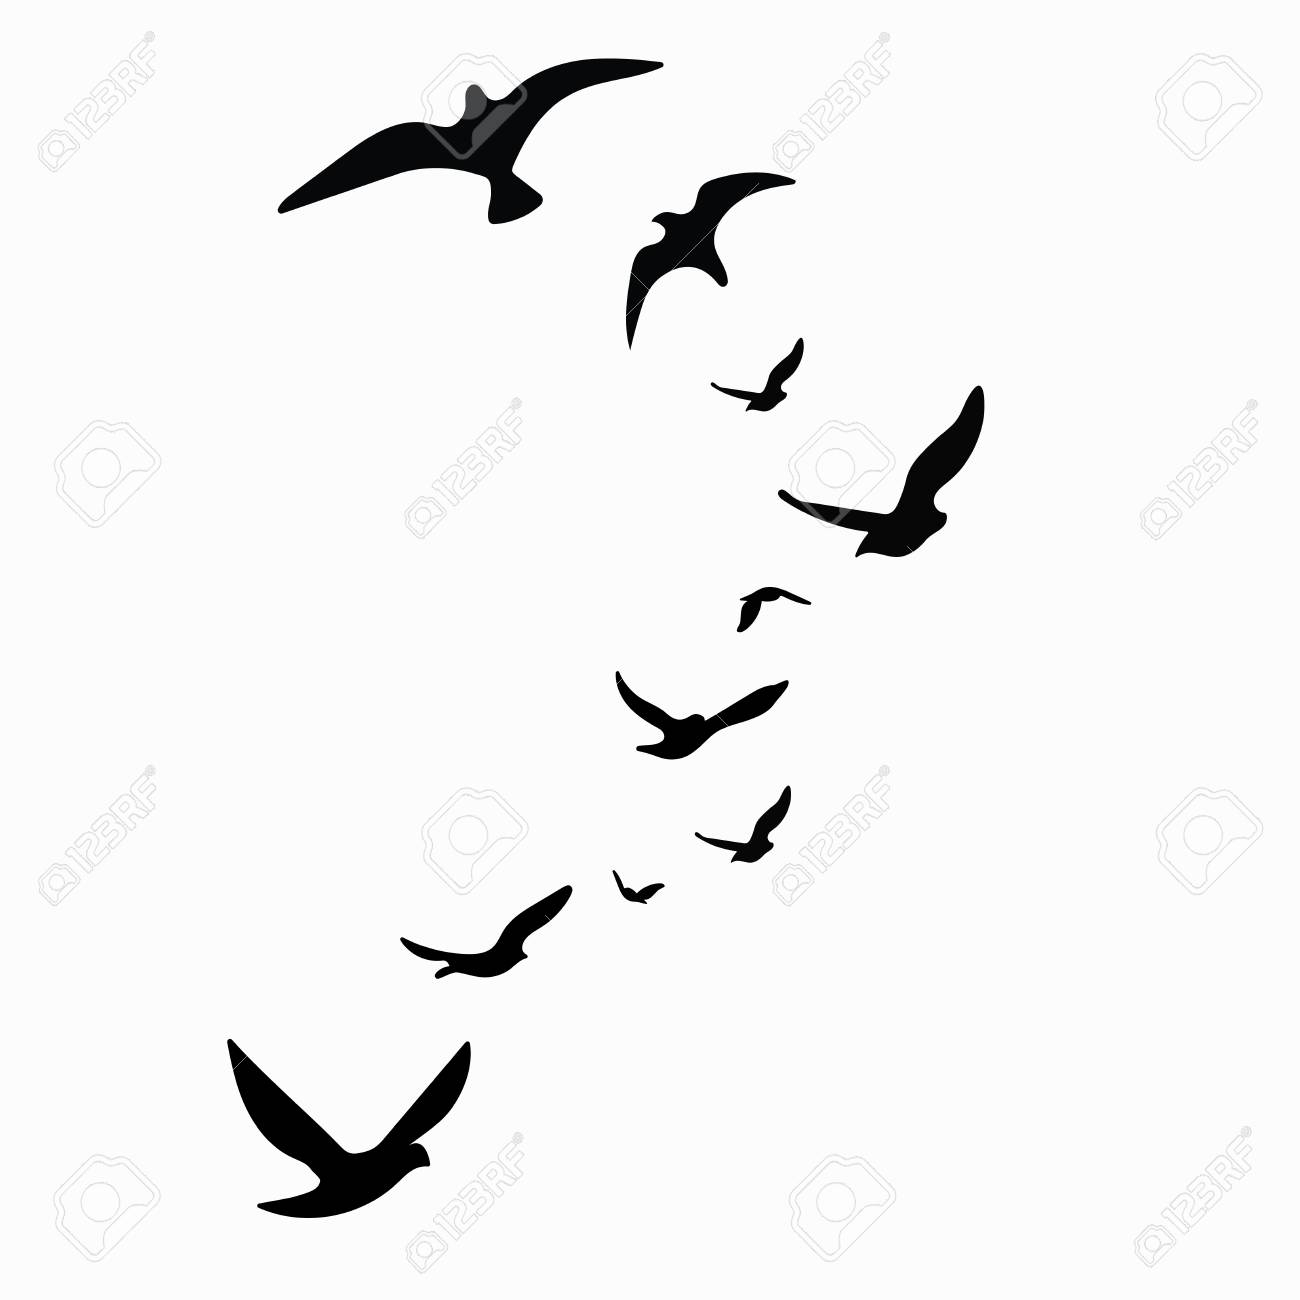 Silhouette Of A Flock Of Birds Black Contours Of Flying Birds regarding sizing 1300 X 1300